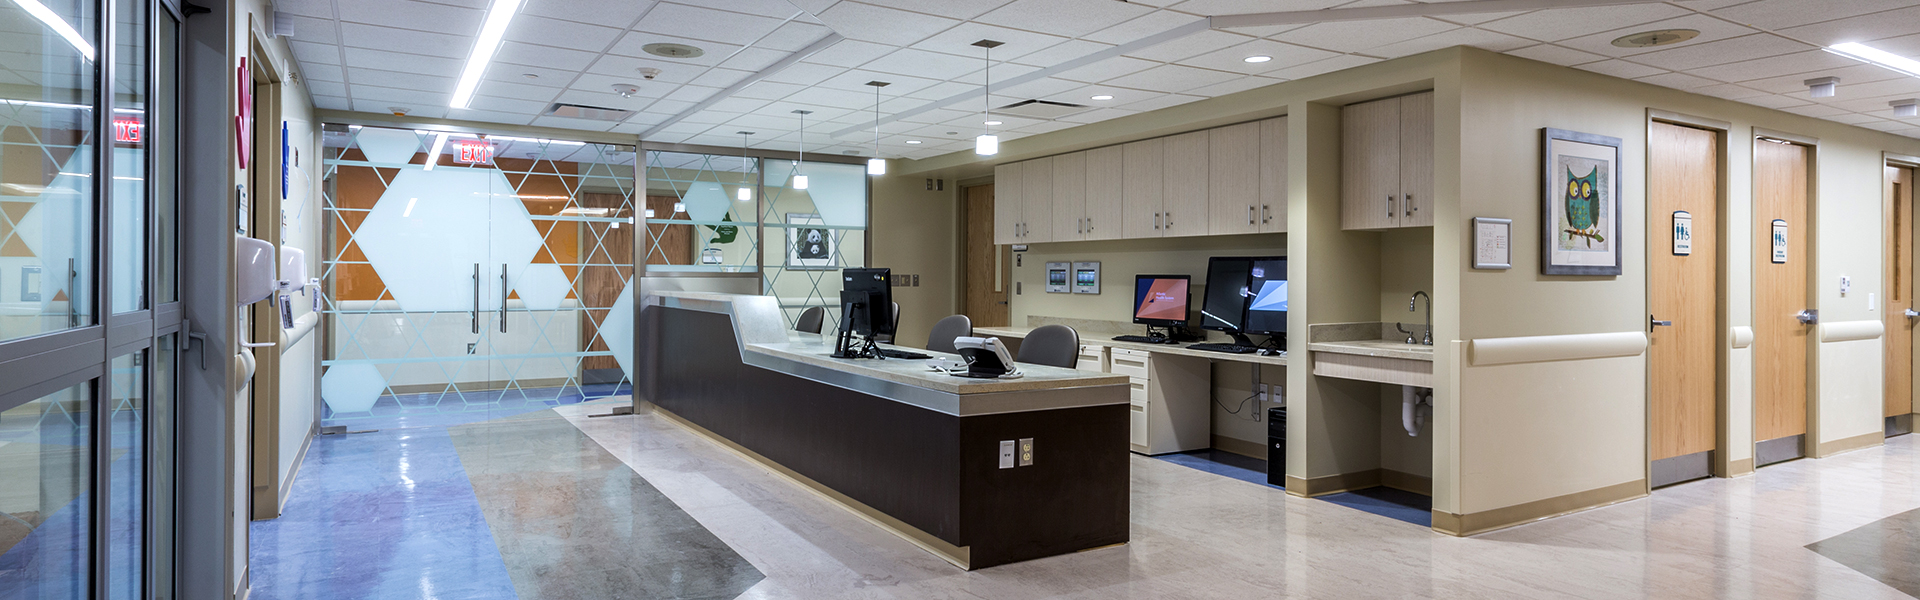 Atlantic Health System Chilton Medical Center Healthcare Construction